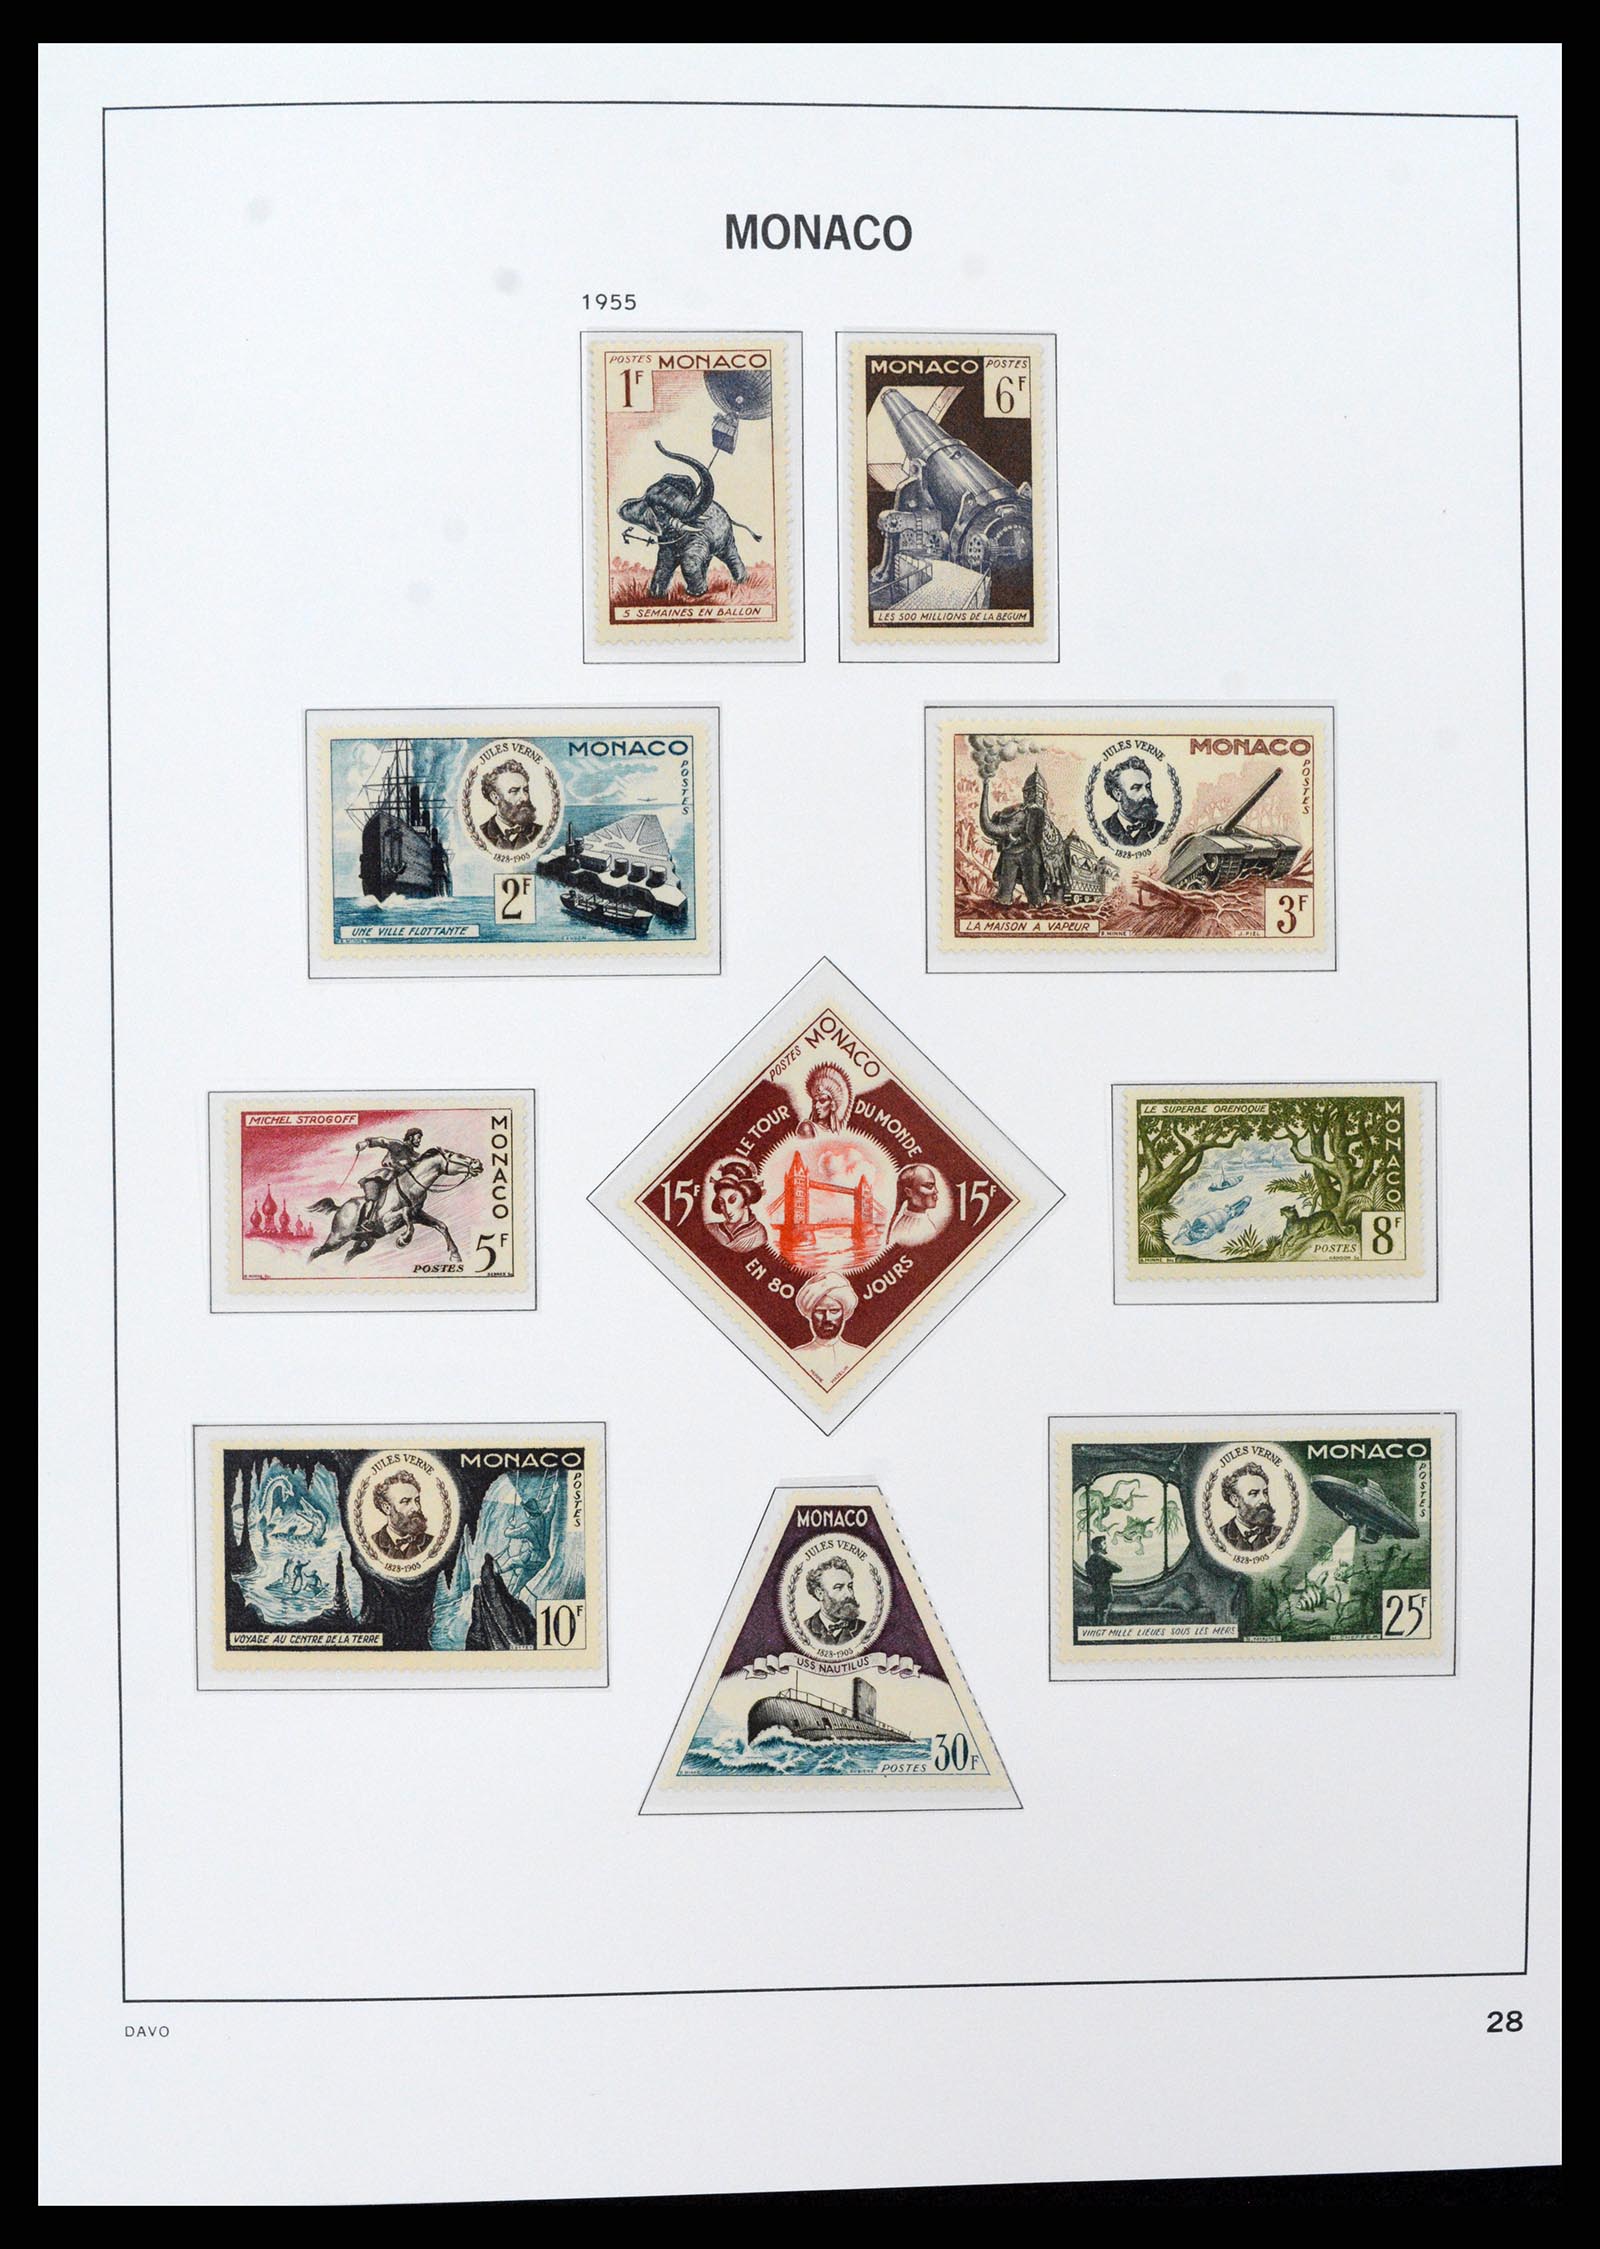 37279 028 - Stamp collection 37279 Monaco 1885-1969.